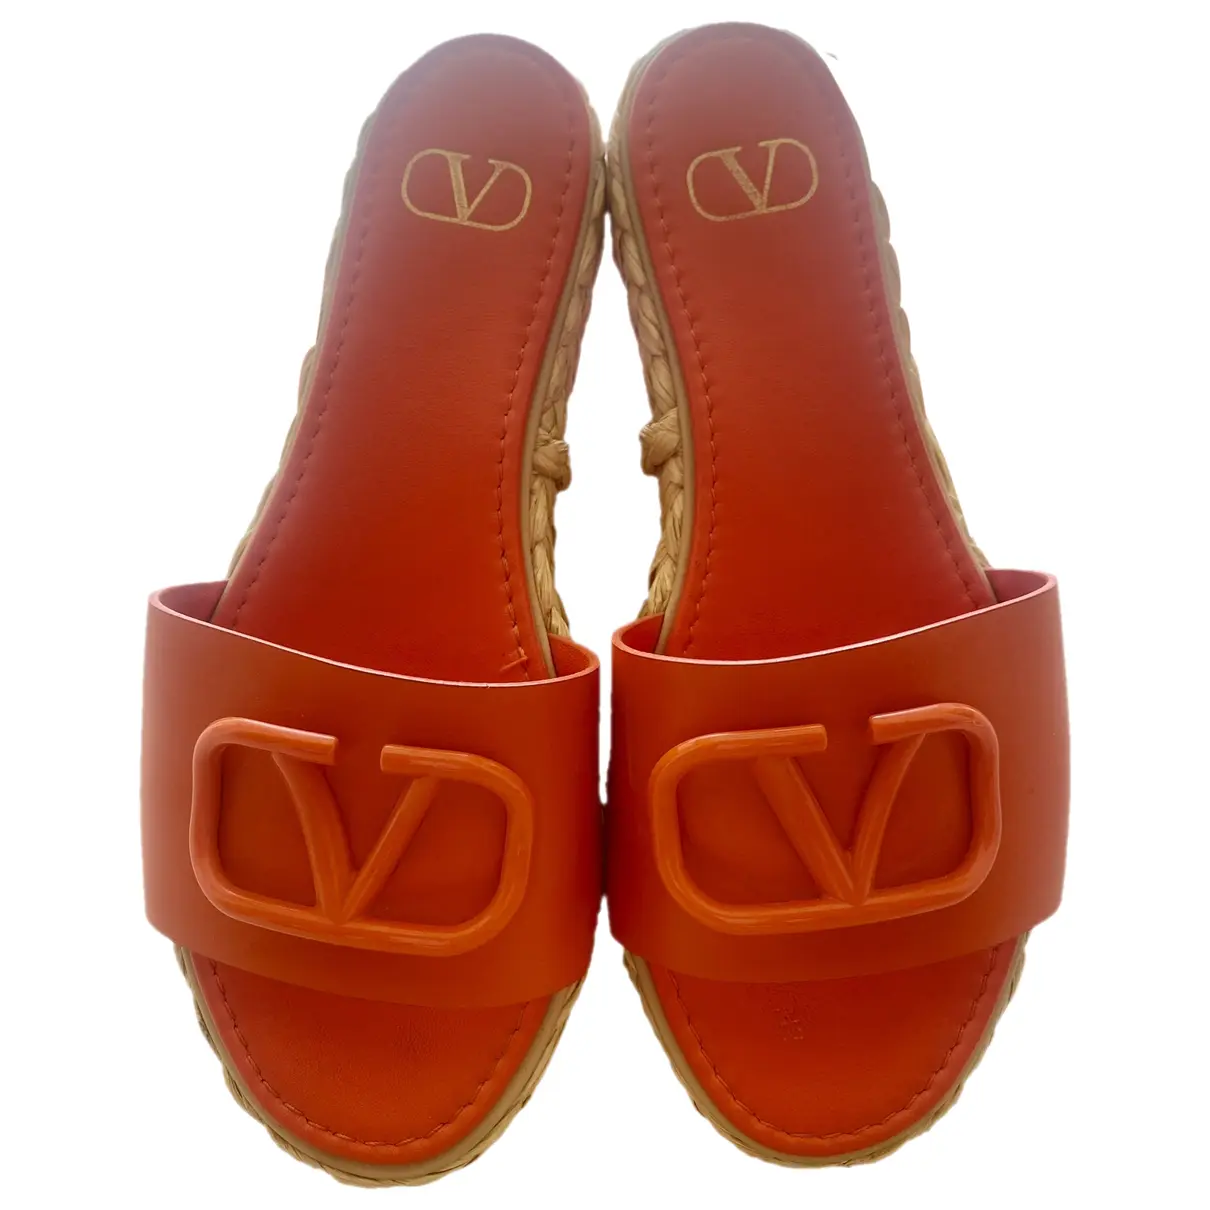 VLogo leather espadrilles